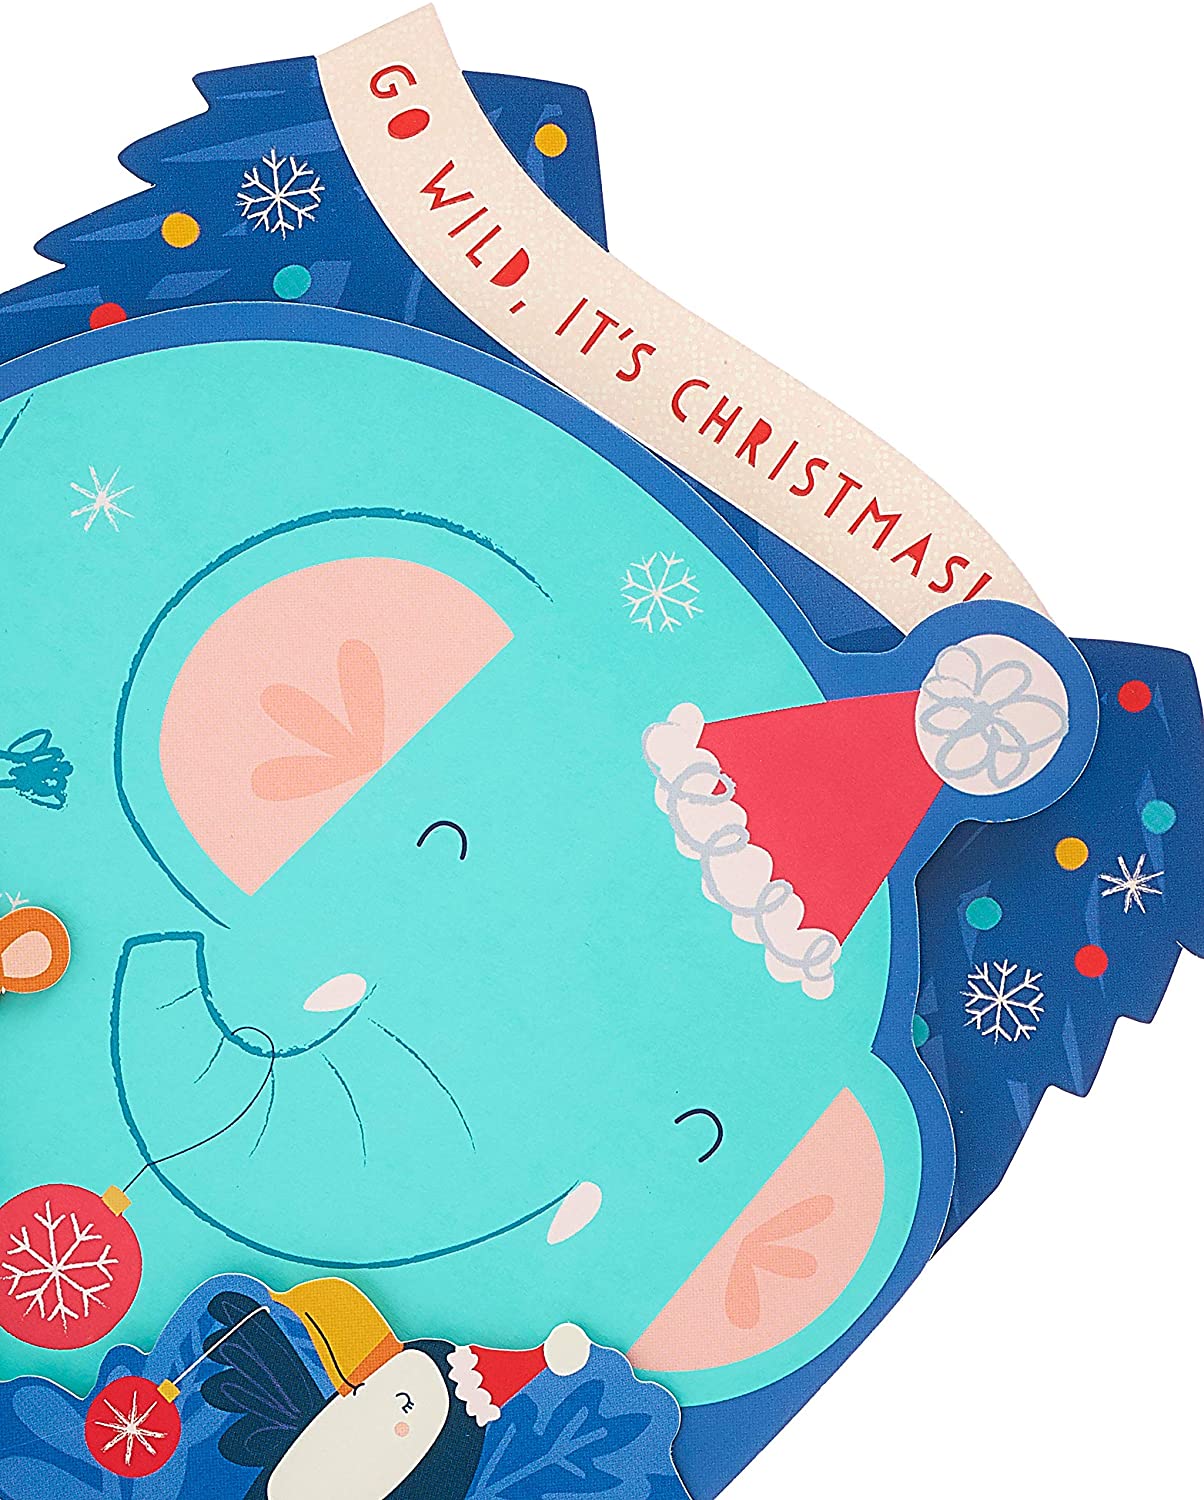 Kids Christmas Card Go Wild Cute Elephant Design 